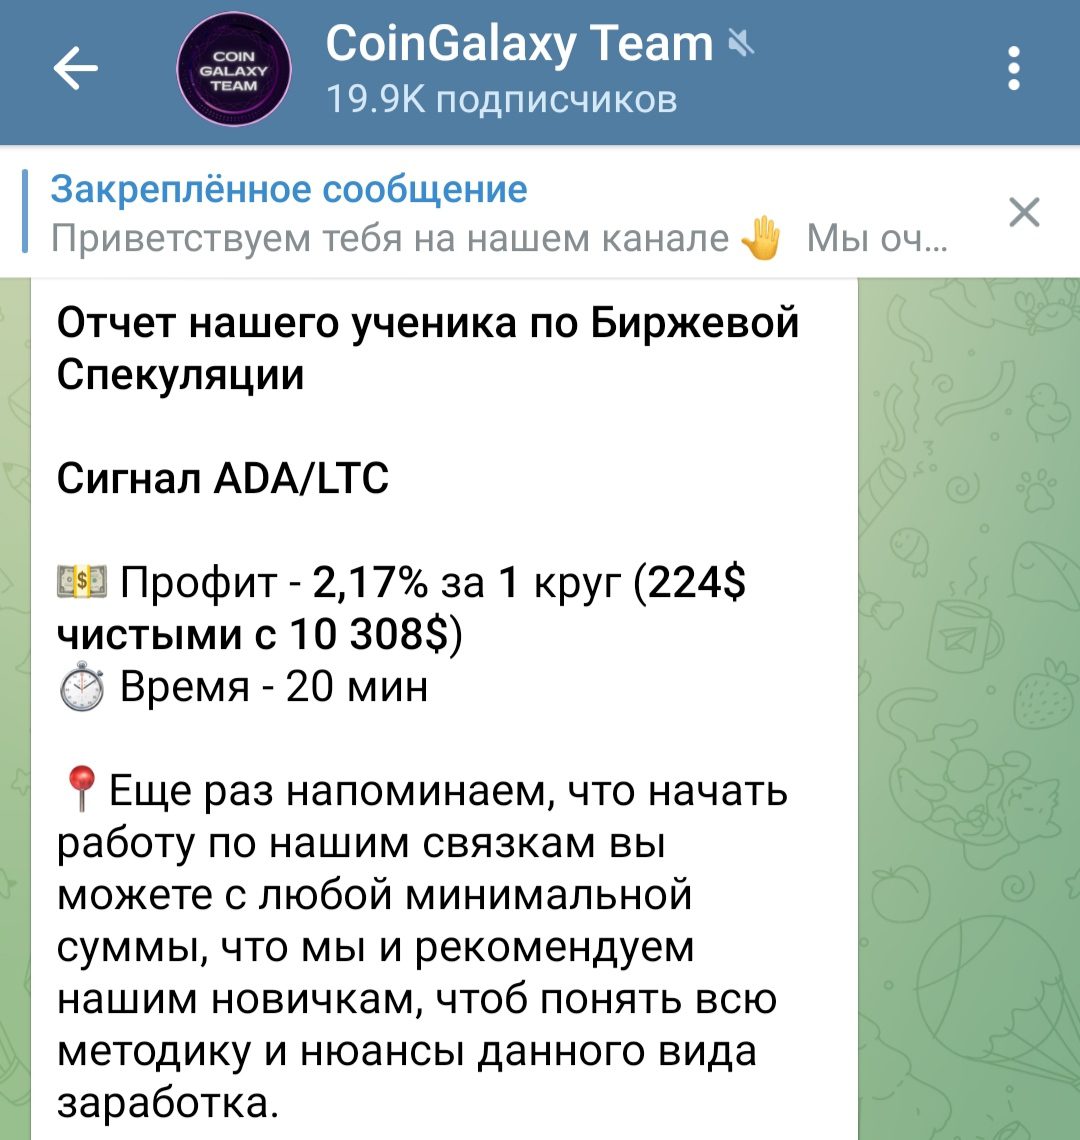 CoinGalaxy Team телеграмм